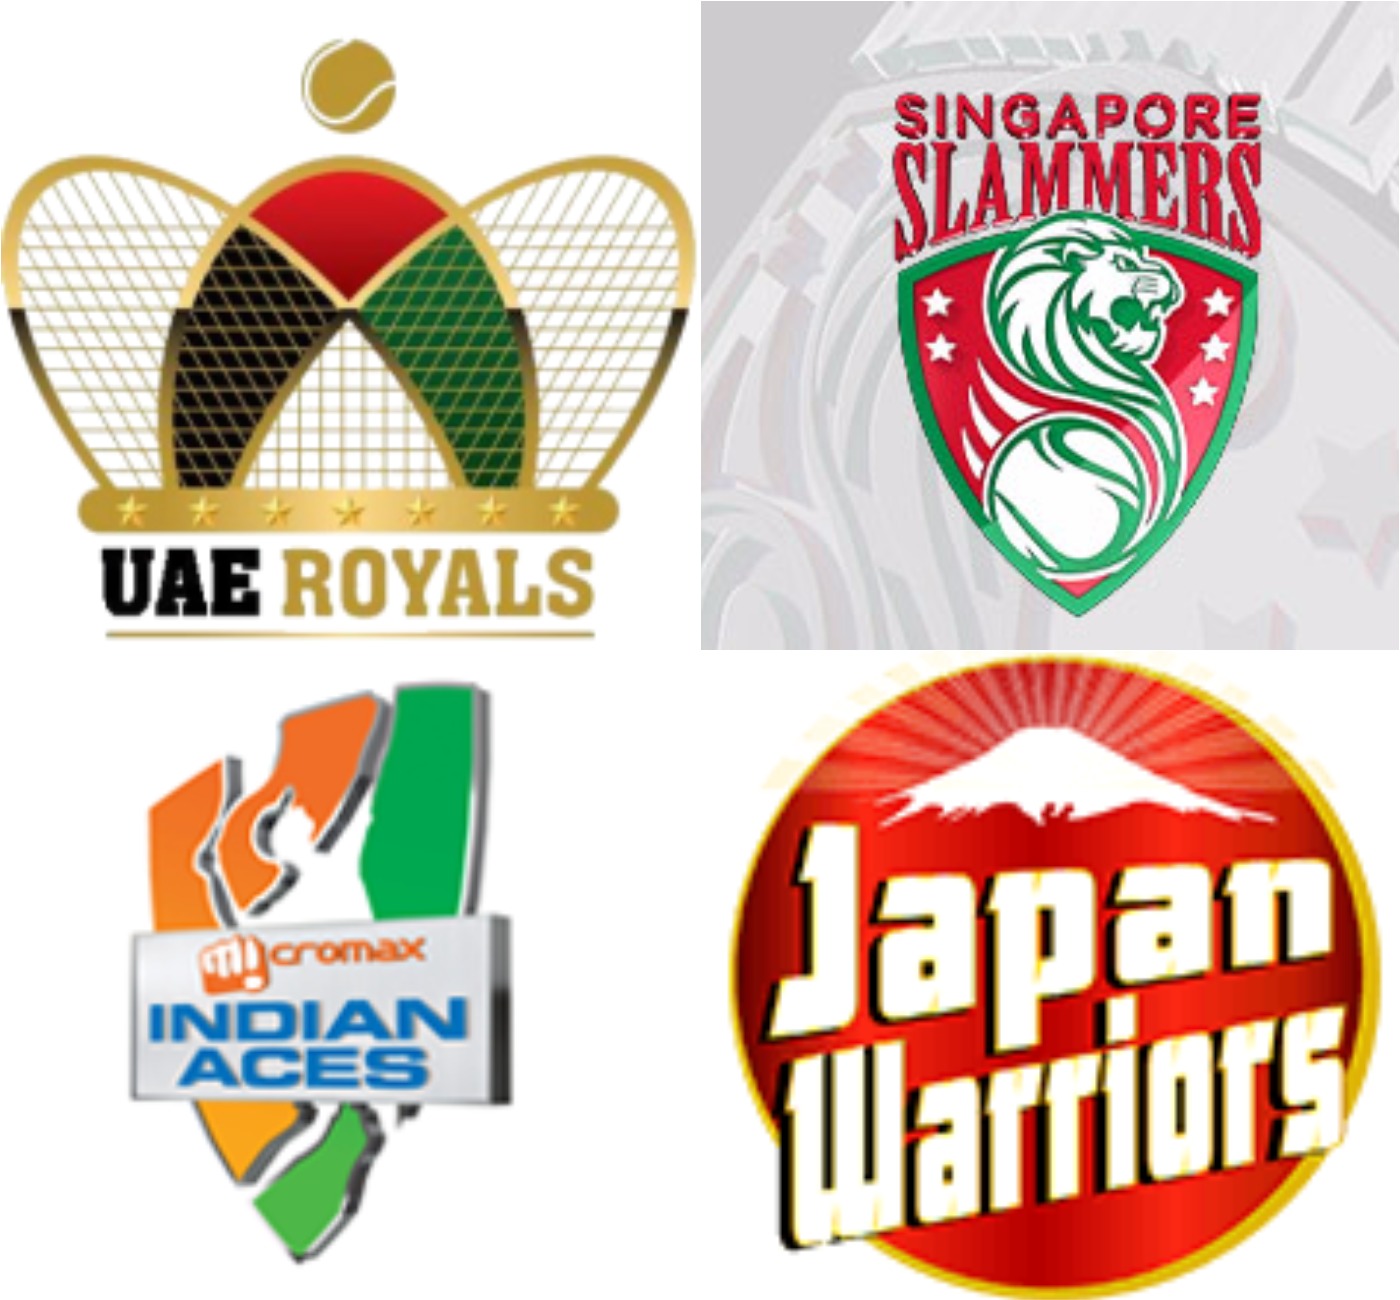 سنگاپور اسلمرز - ژاپن وریرز - ایندین ایسز - لیگ برتر بین المللی تنیس - امارات رویالز